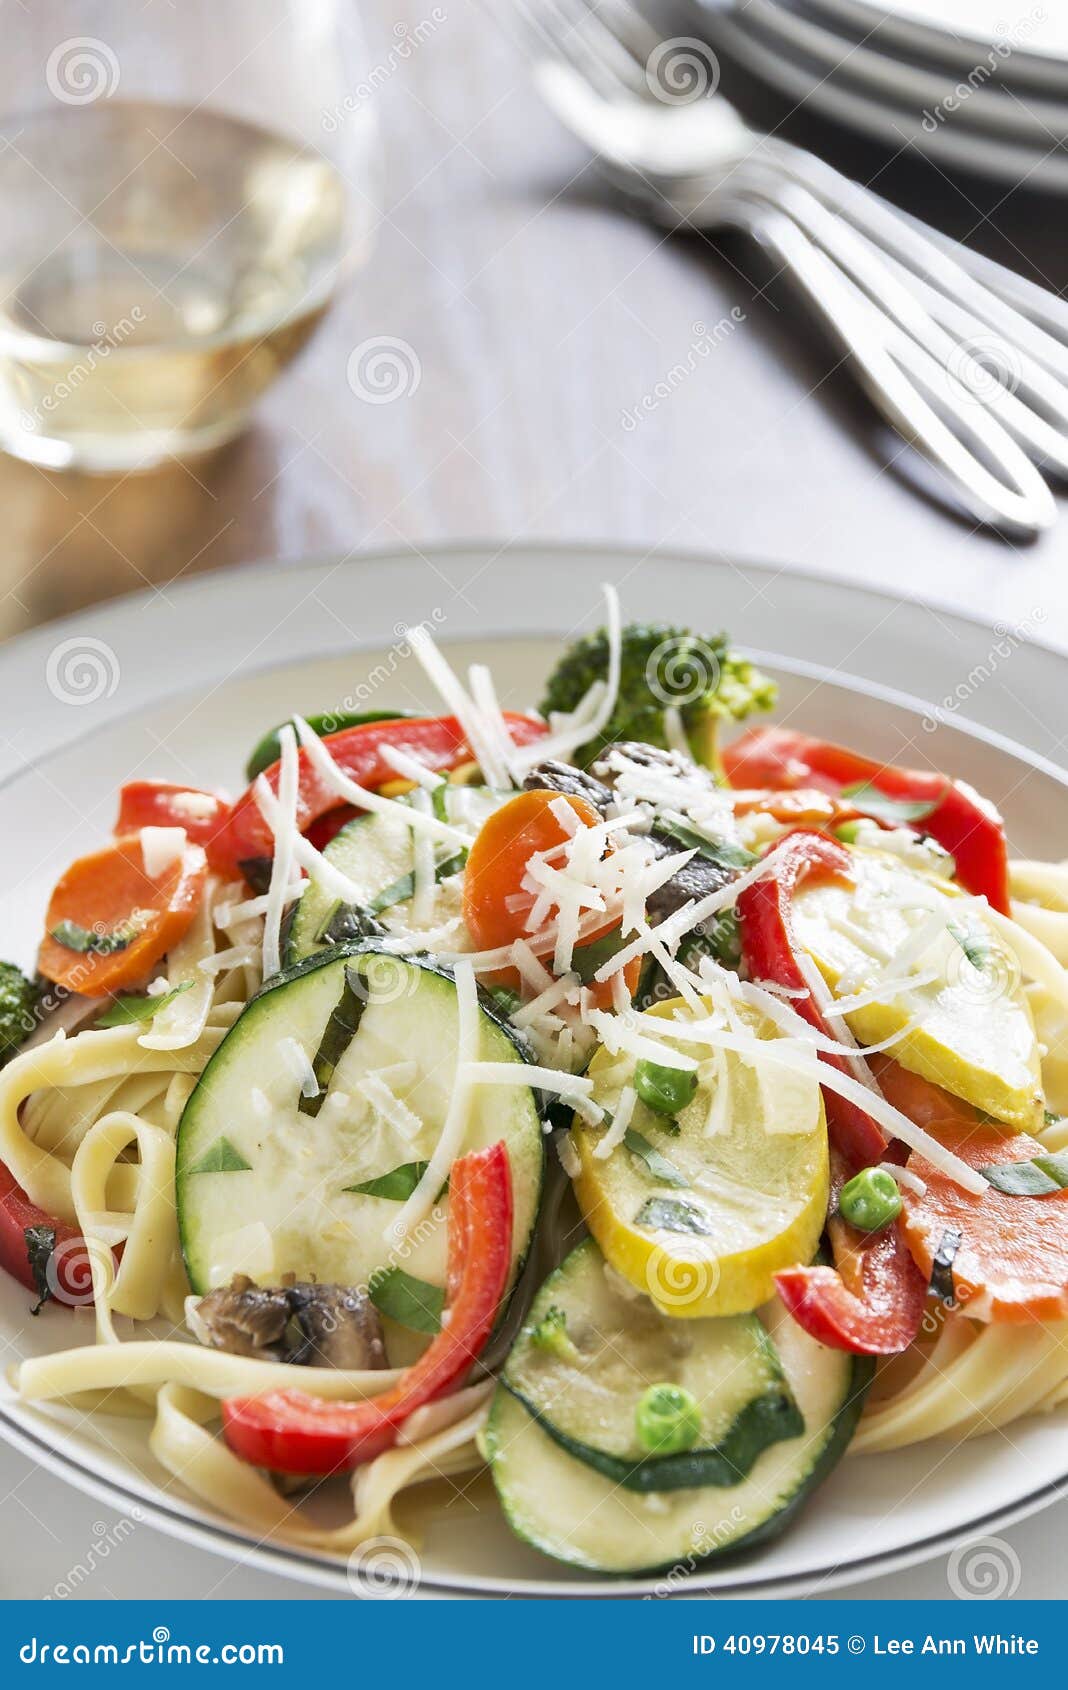 pasta primavera with fettuccine and garden vegetables